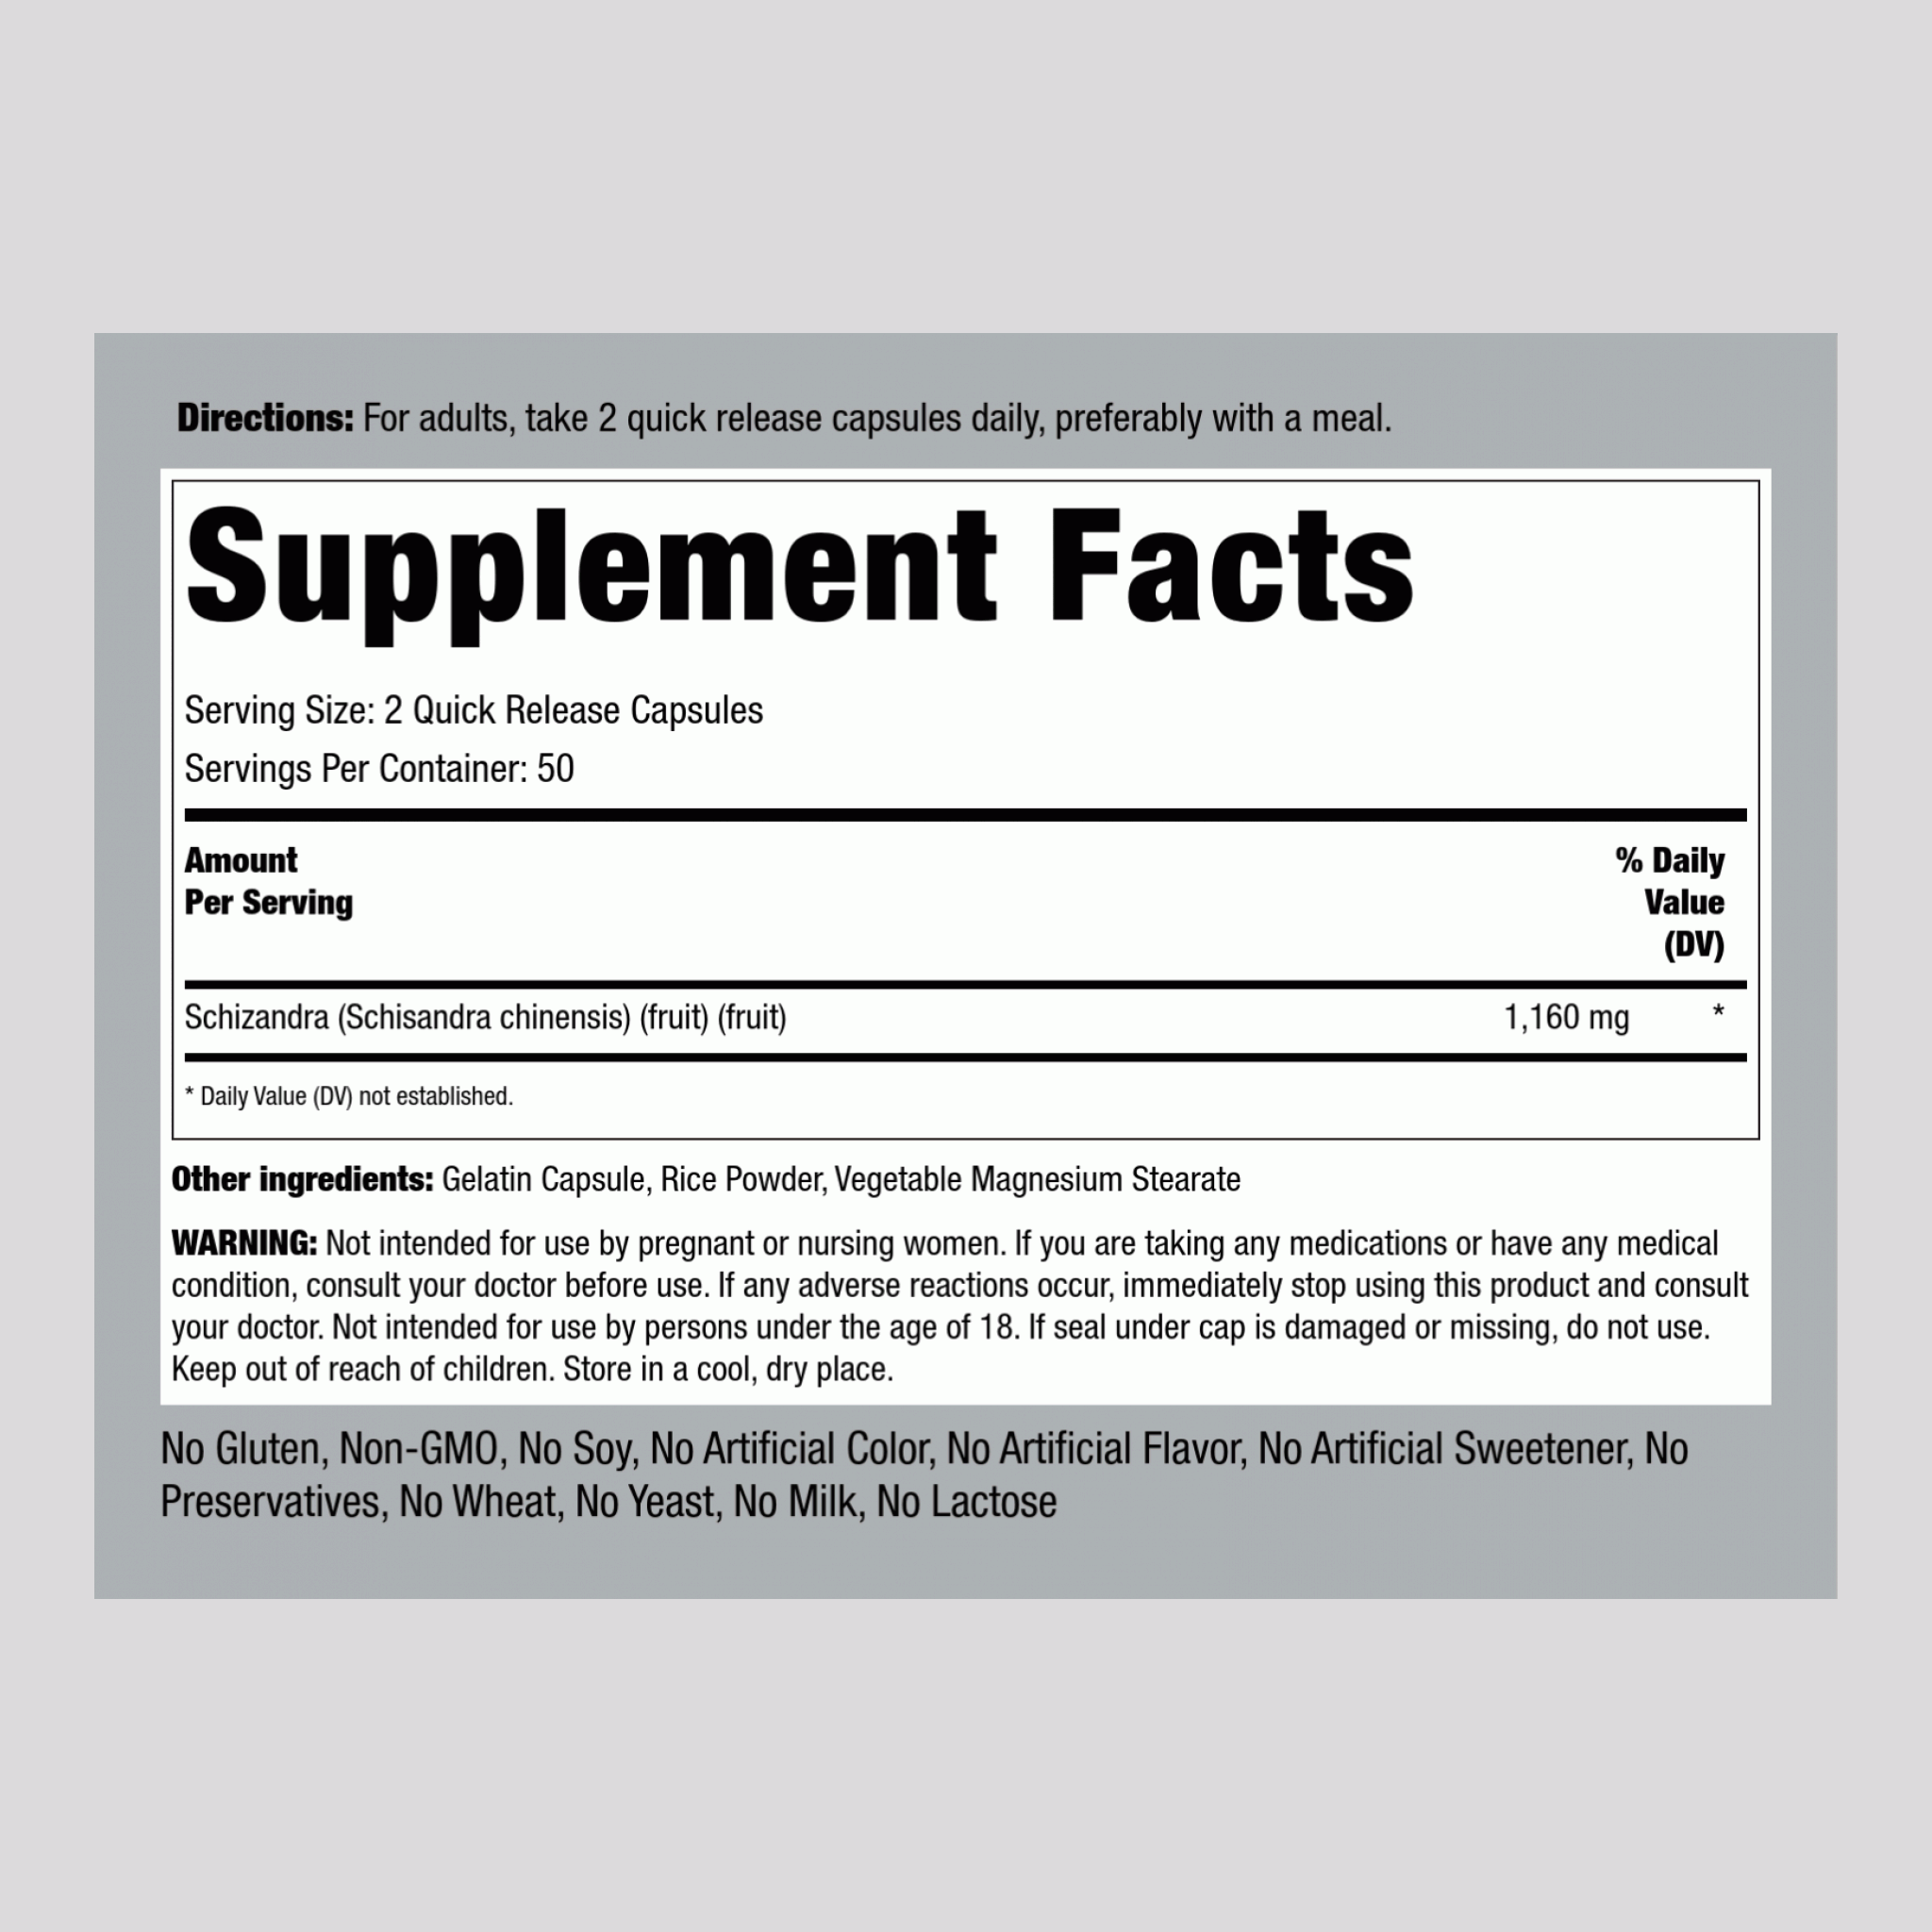 Schizandra (Berry) Fruit, 1160 mg (per serving), 100 Quick Release Capsules